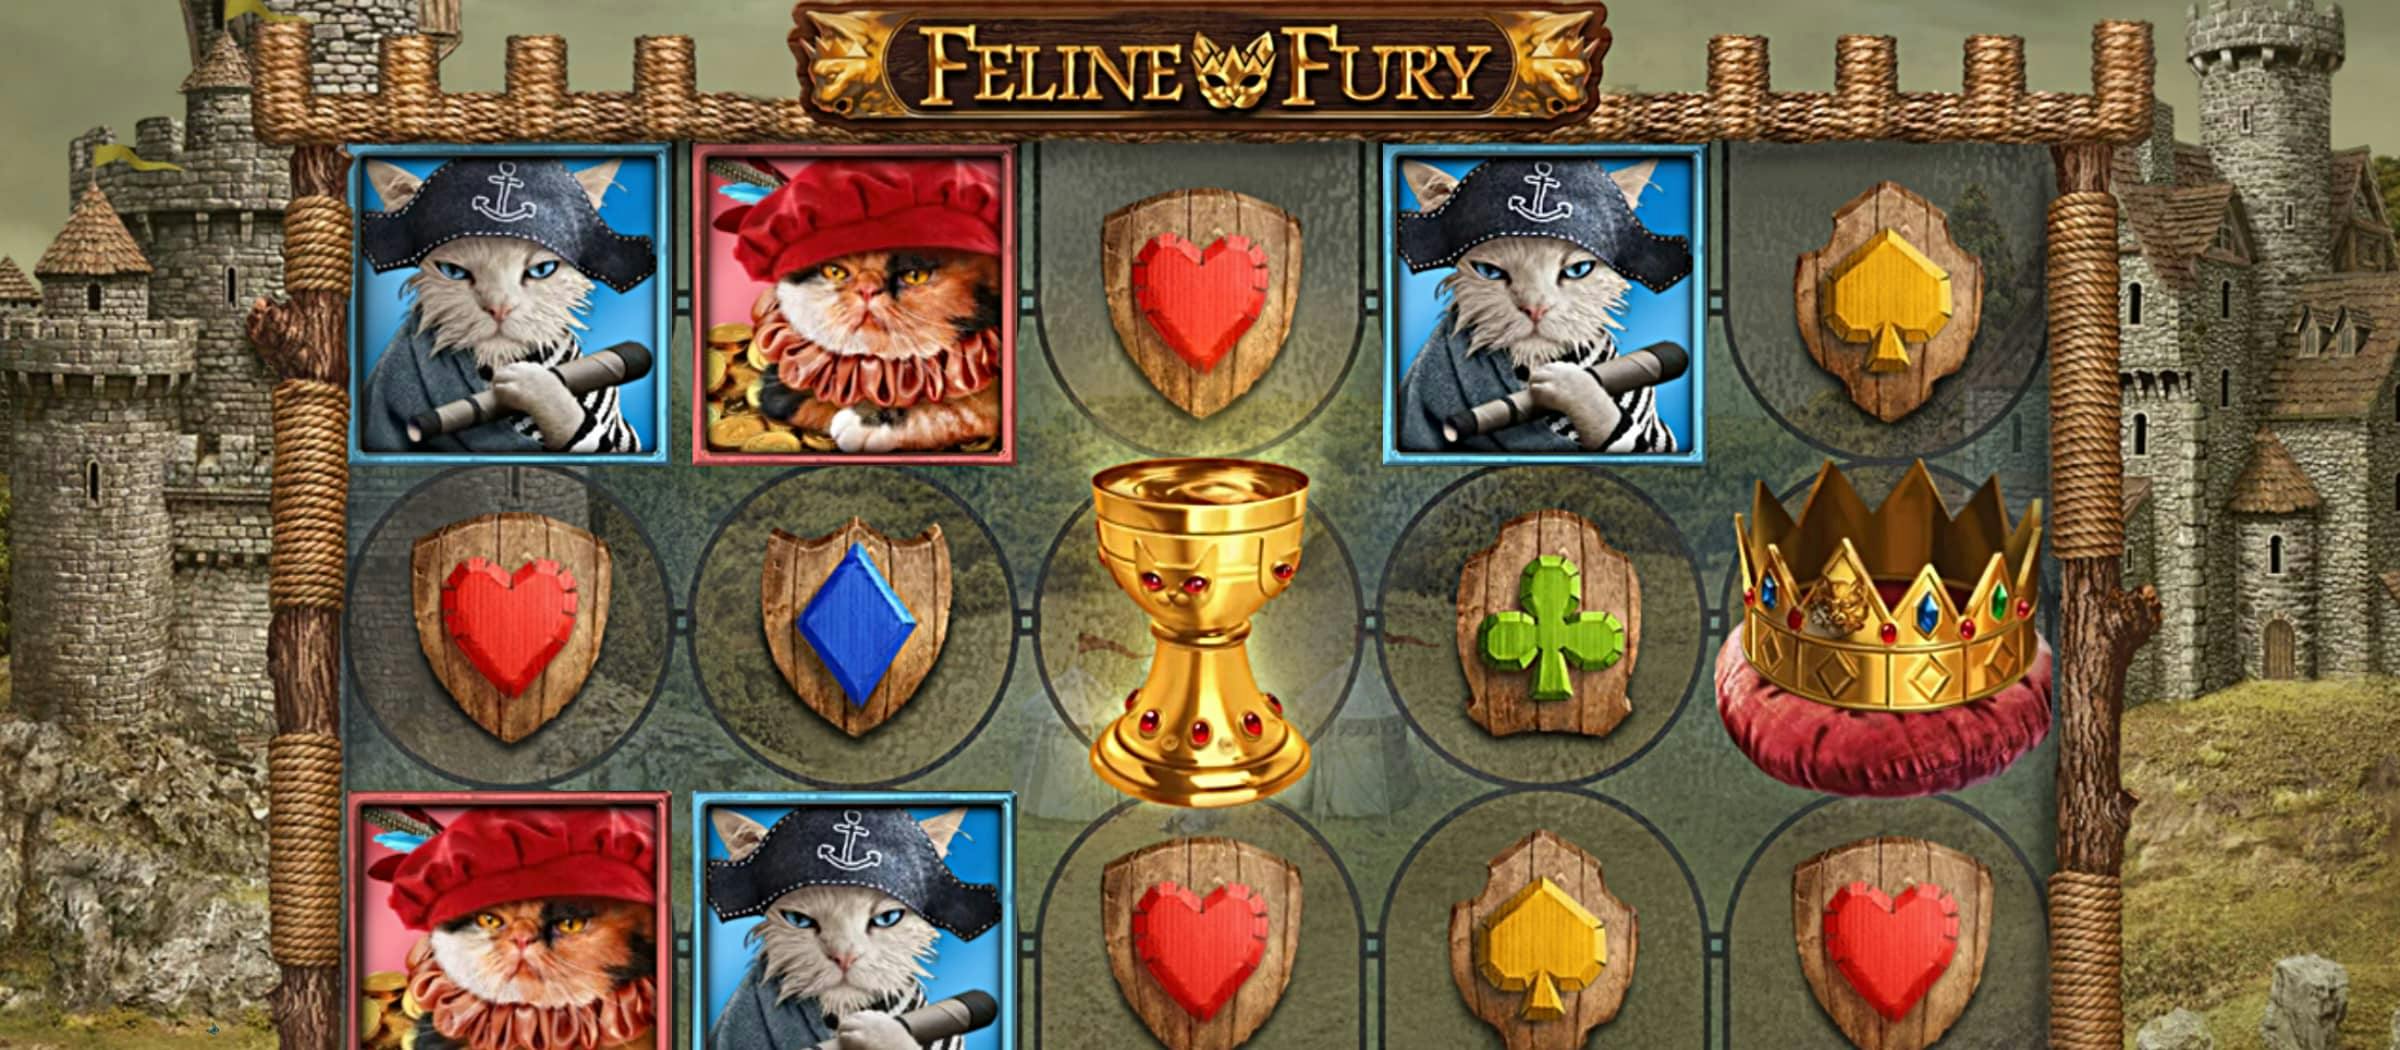 It’s raining cats and prizes in casino slot Feline Fury!